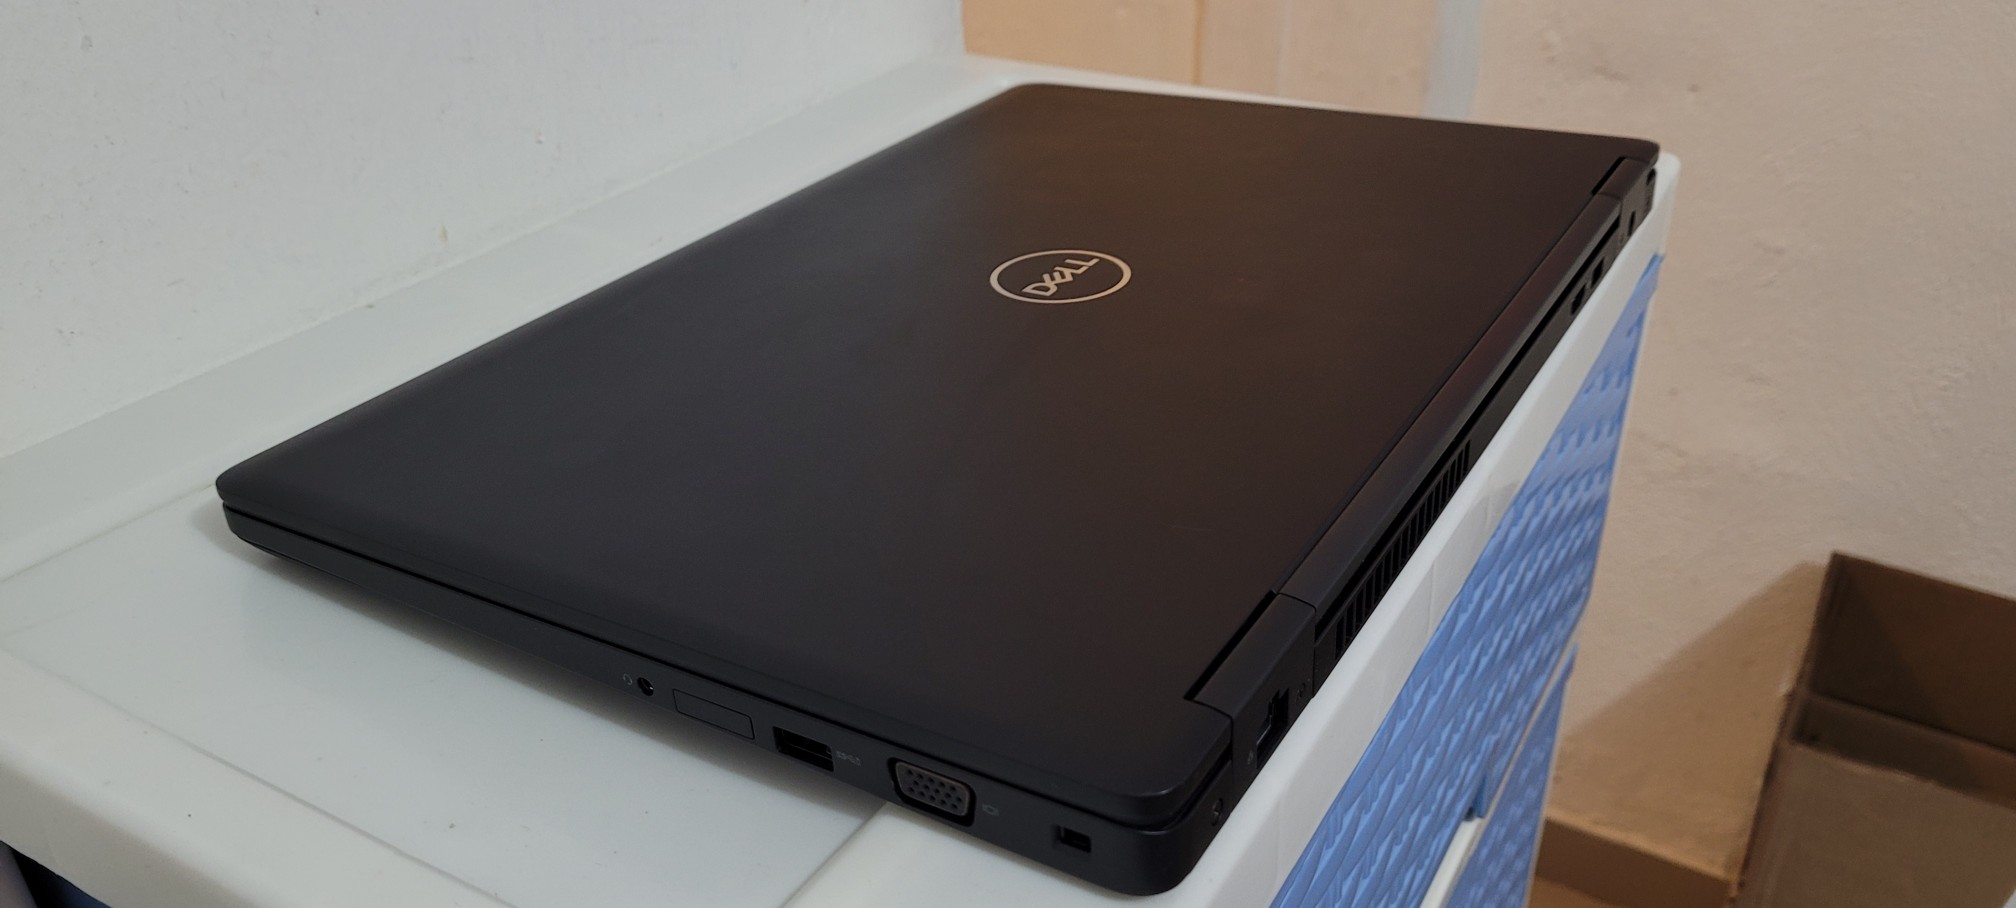 computadoras y laptops - Dell 5570 17 Pulg Core i7 6ta Ram 16gb Disco 256gb Video intel y Aty Radeon 8gb 2